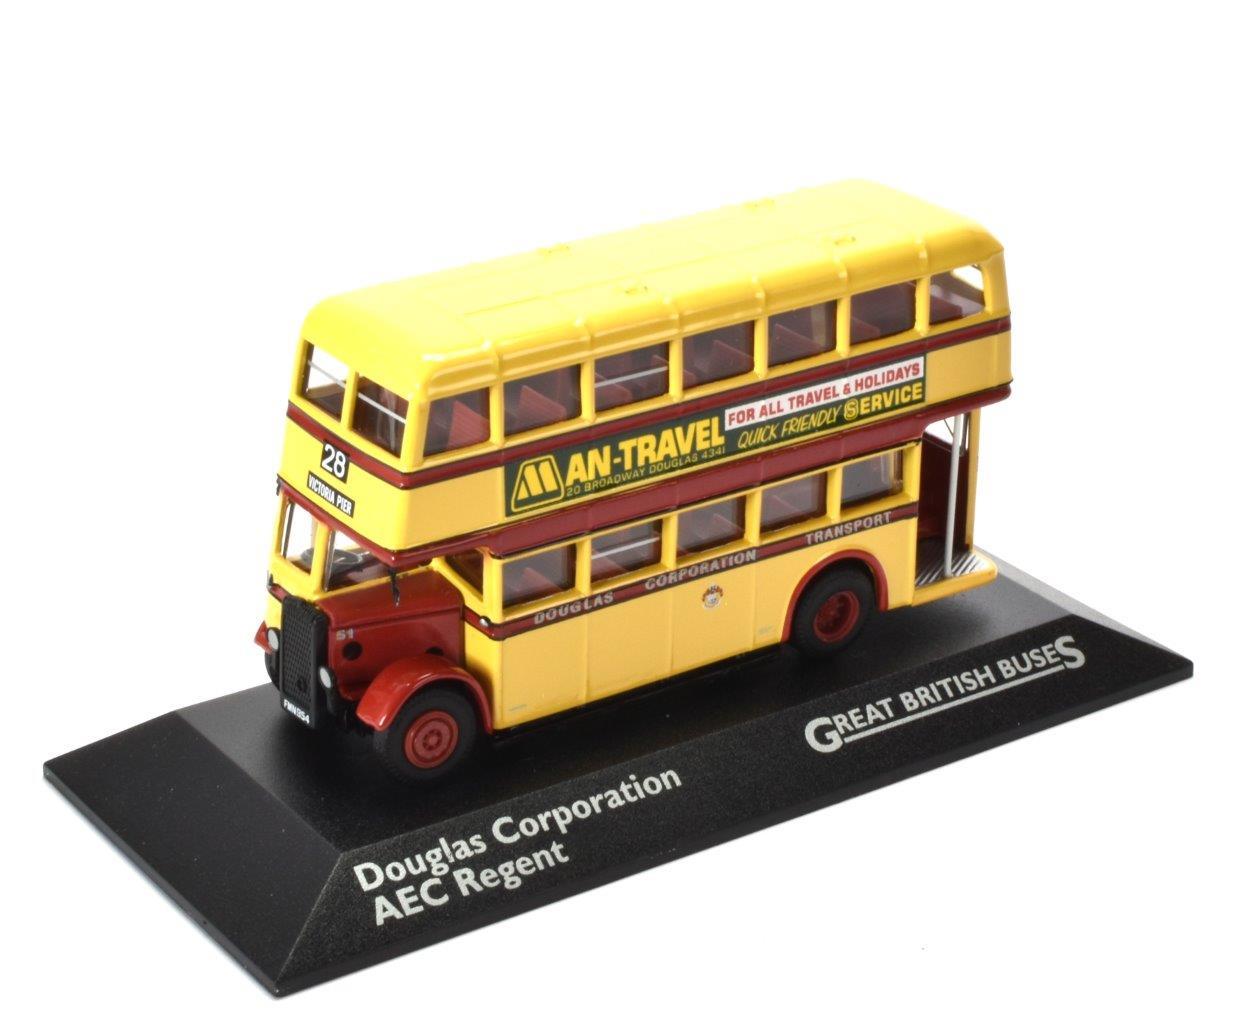 Double decker bus, Douglas Corporation AEC Regent 1:76 scale model from Atlas Editions